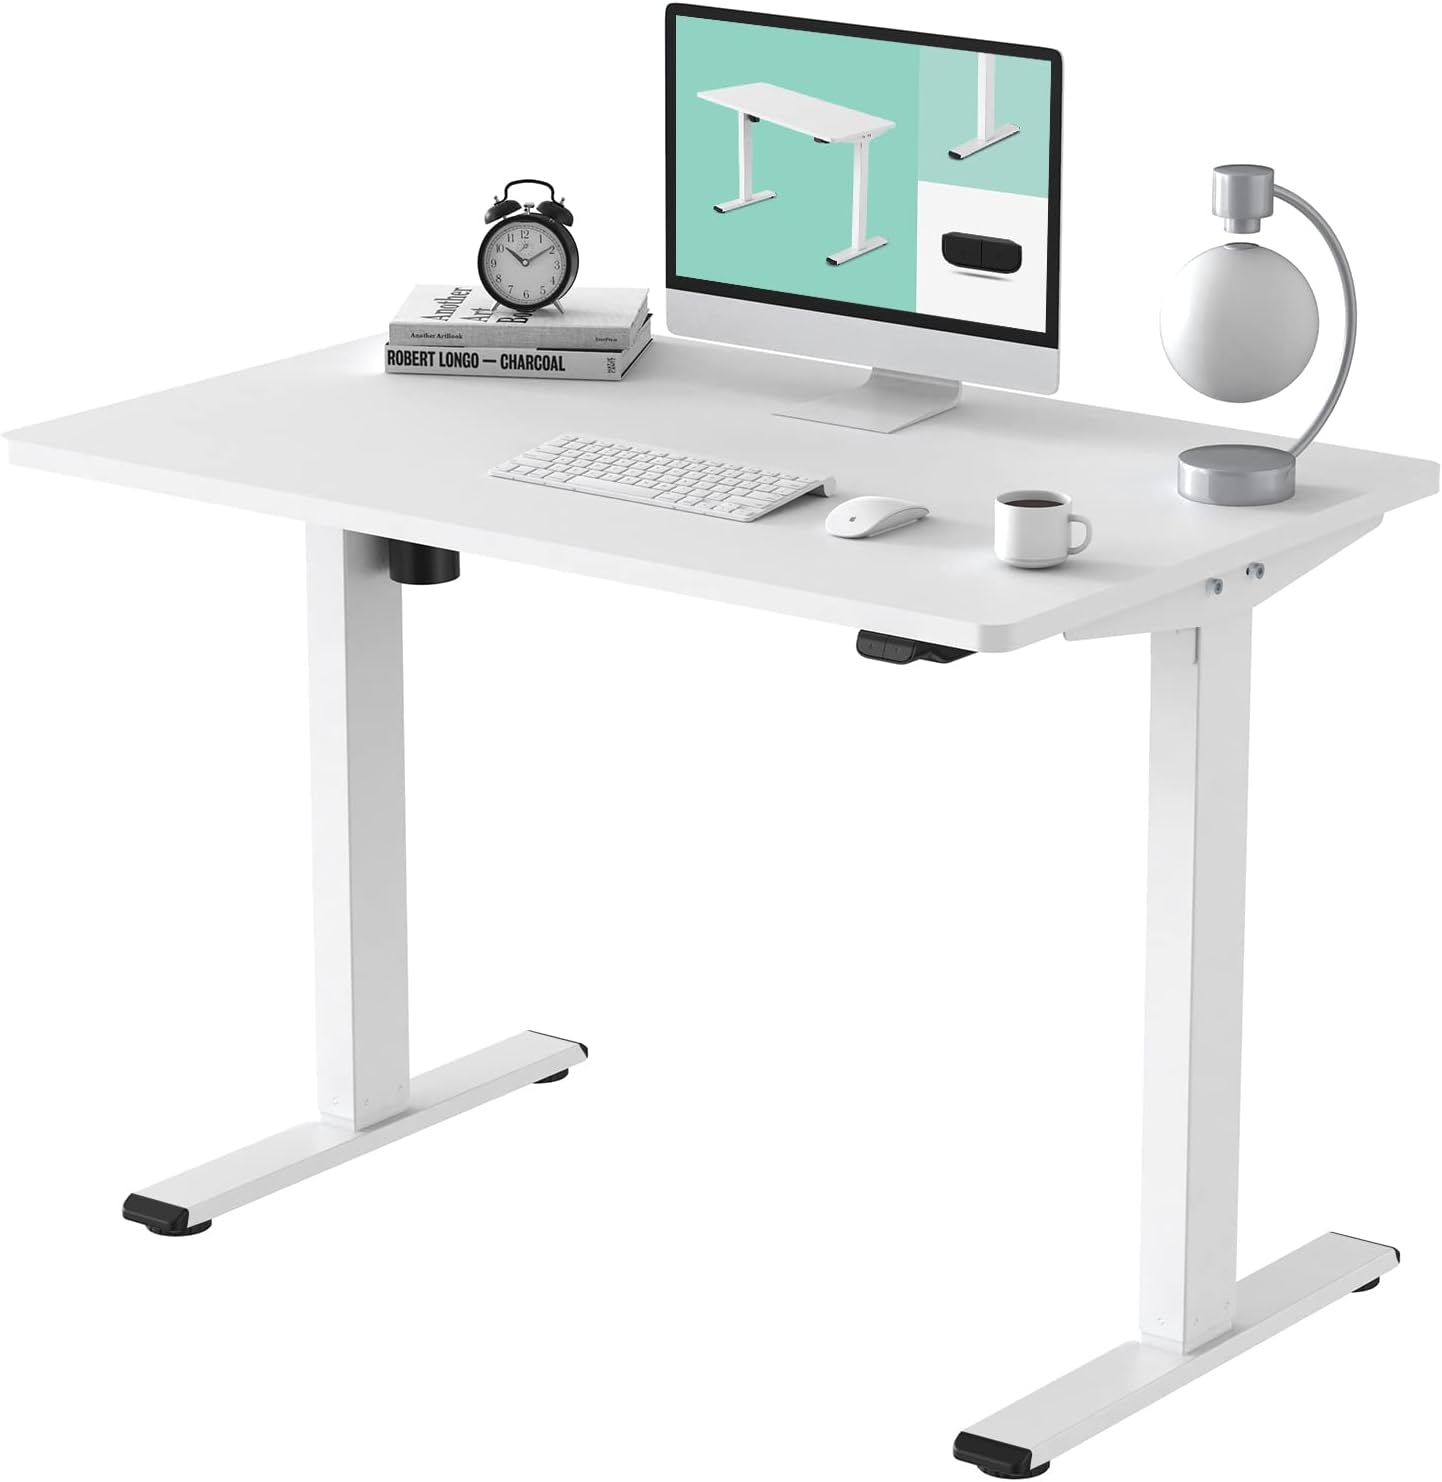 FLEXISPOT Electric Standing Desk | DeviceDaily.com